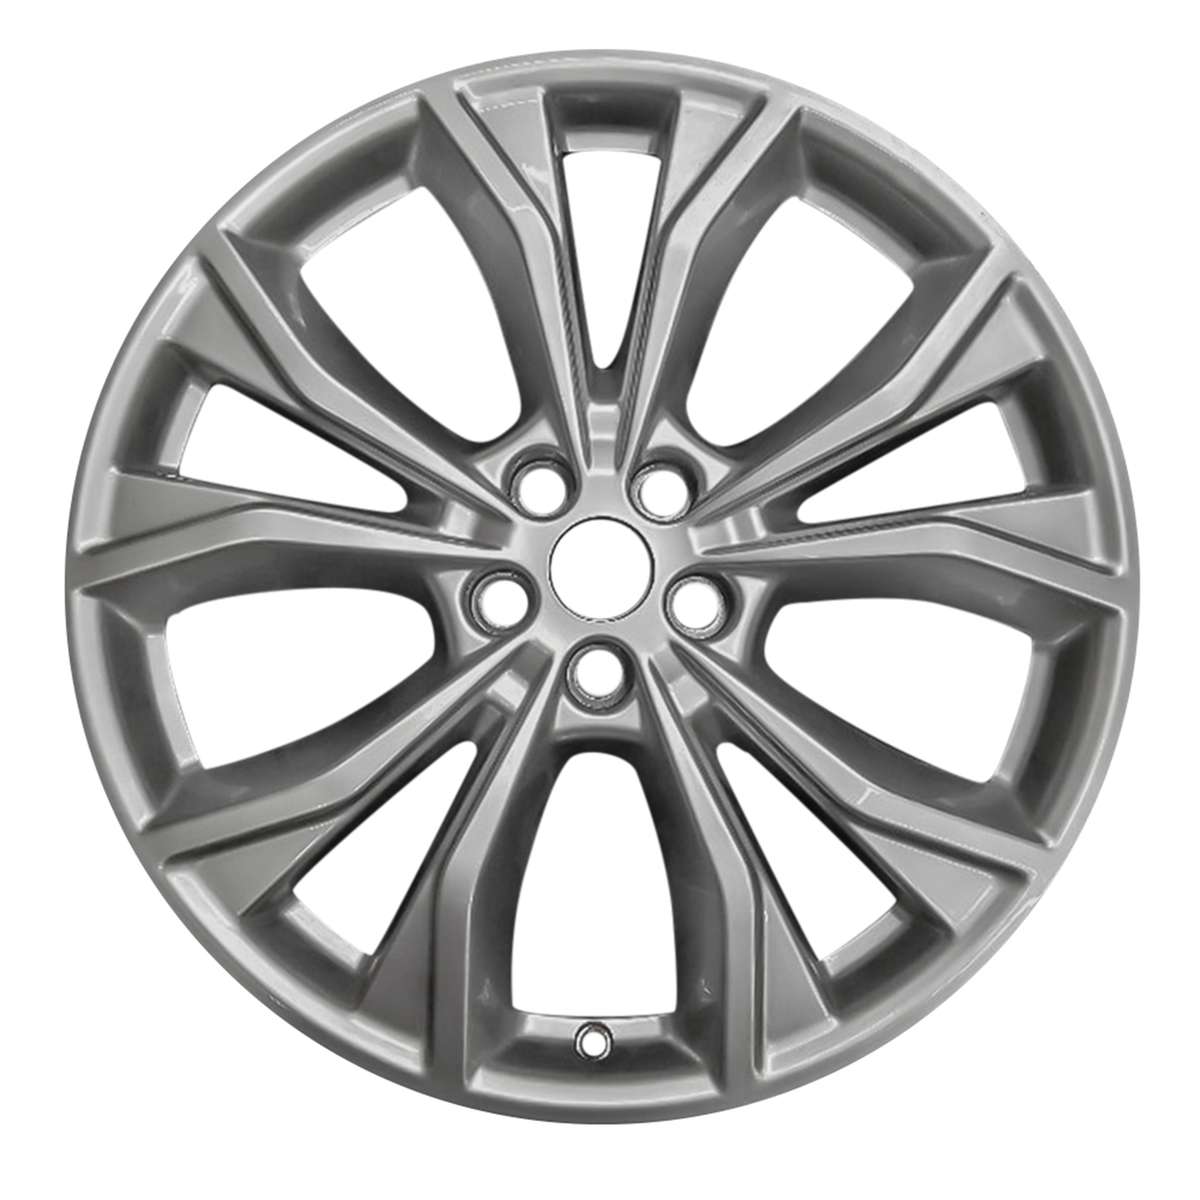 2021 Ford Explorer 20" OEM Wheel Rim W10268S